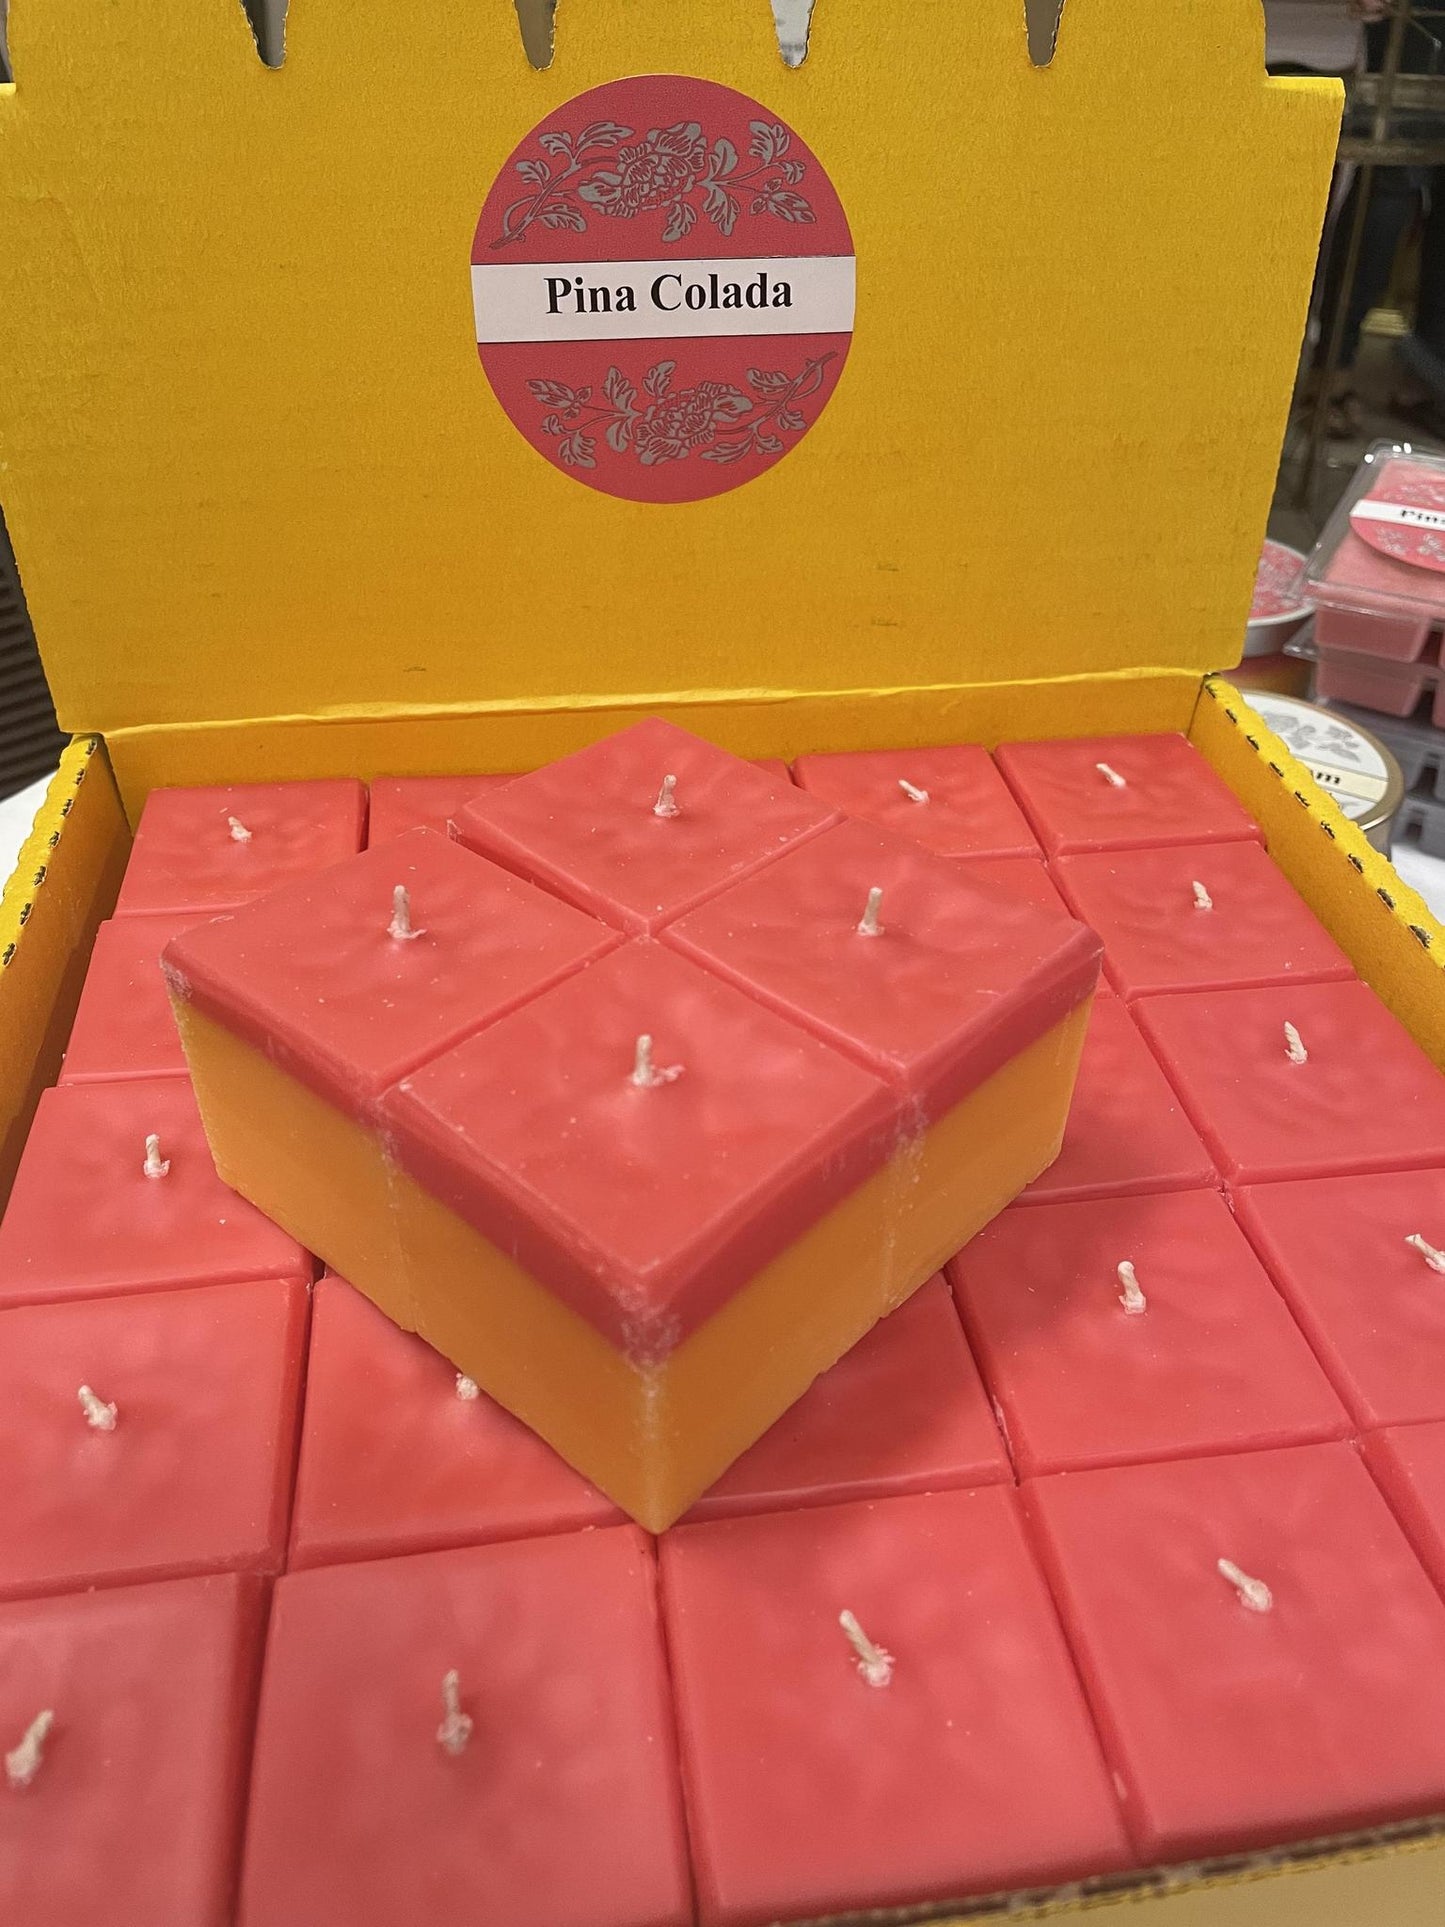 Square Candles - Pina Colada